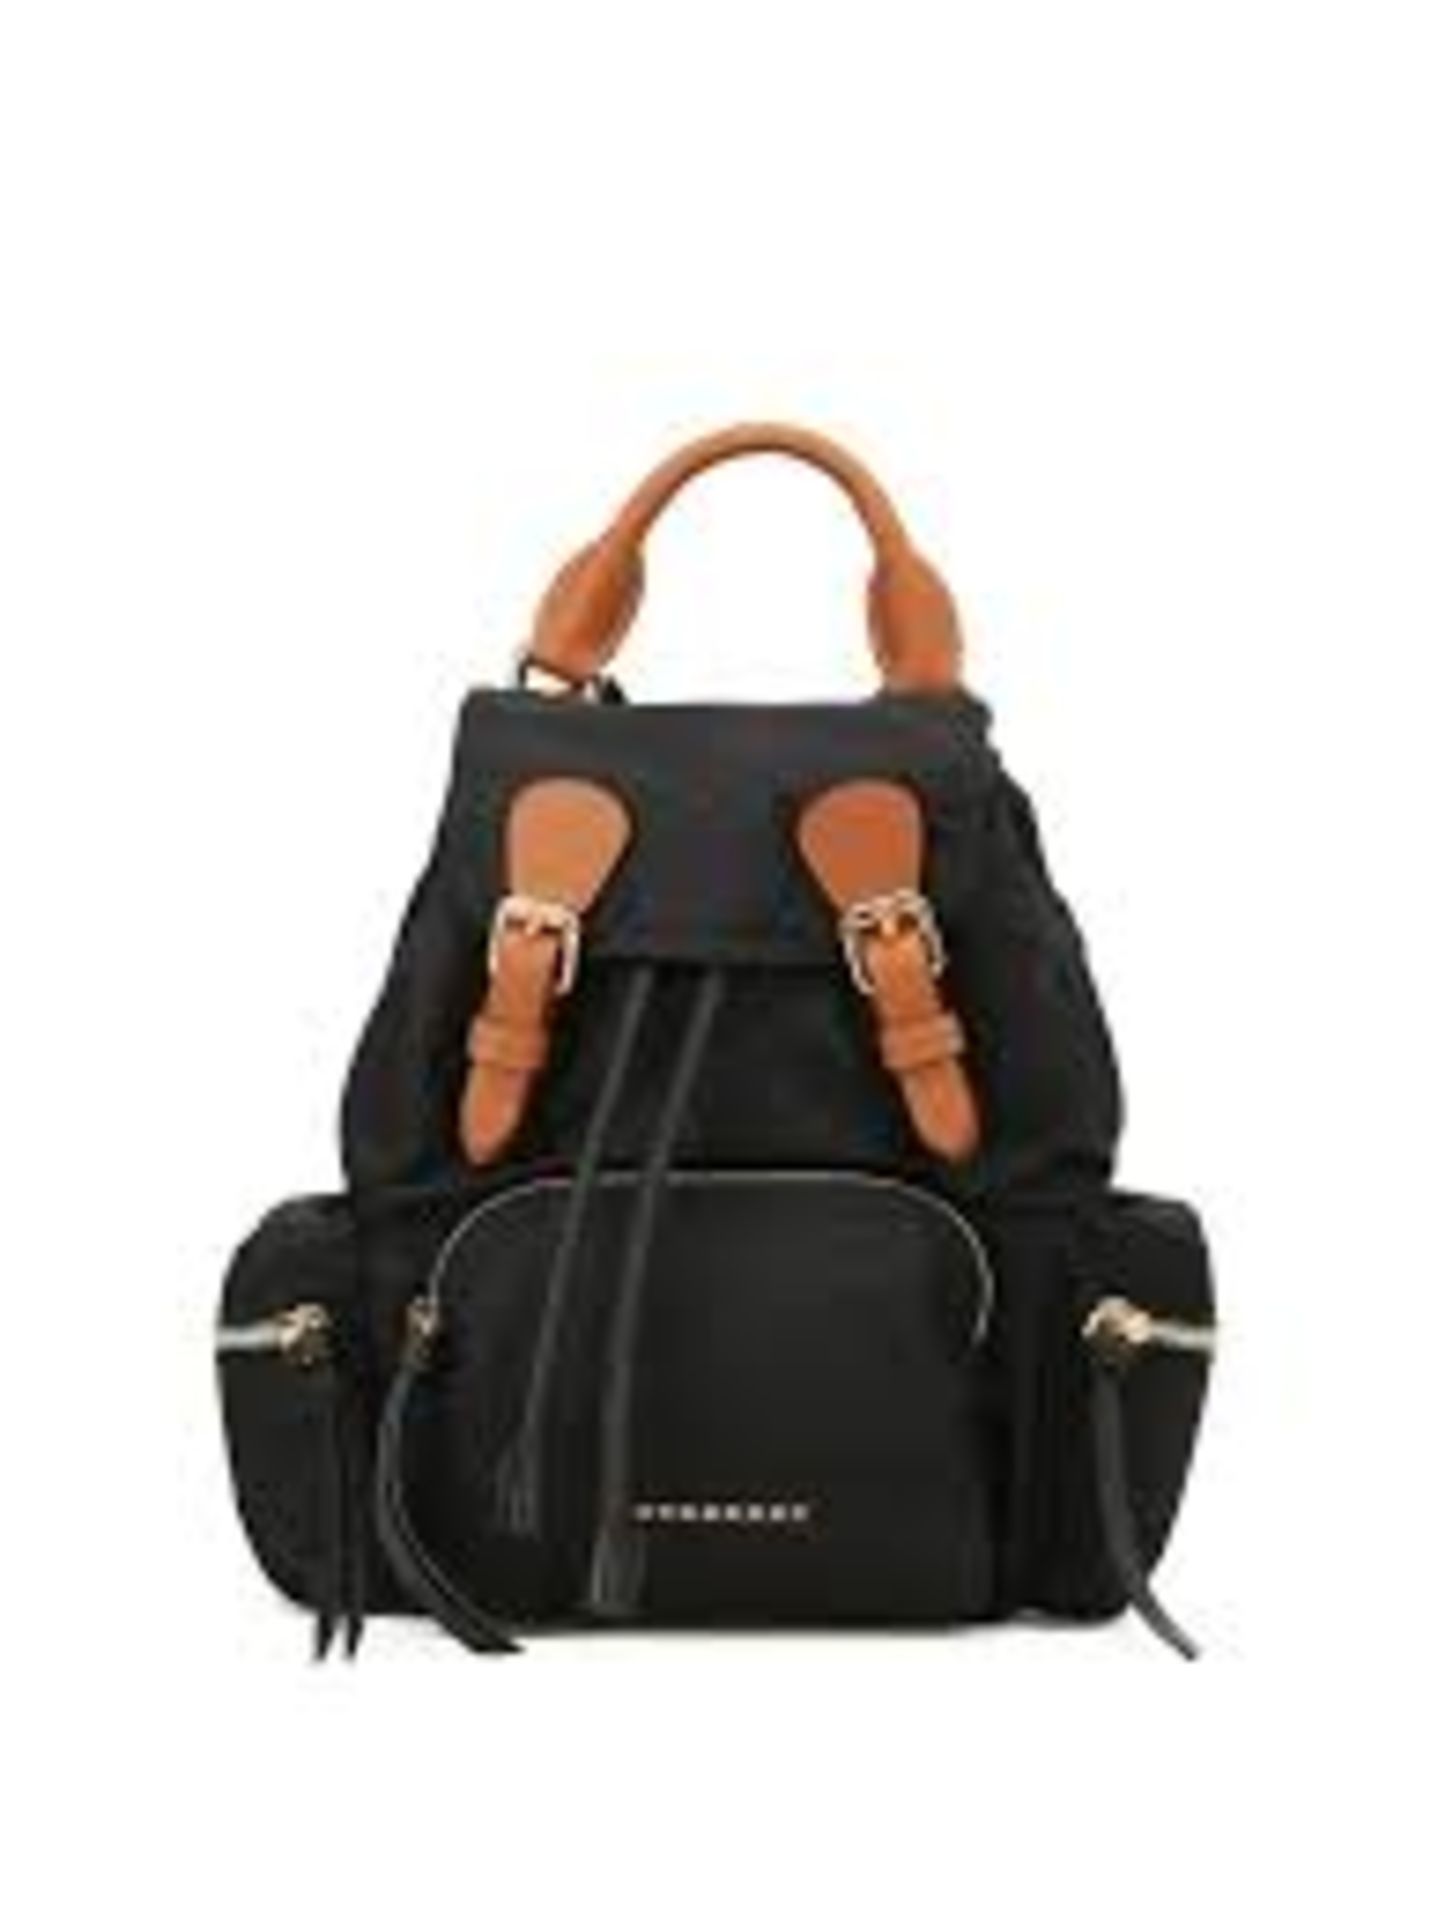 BURBERRY black nylon backpack. Personalised ZYL. 35x35cm